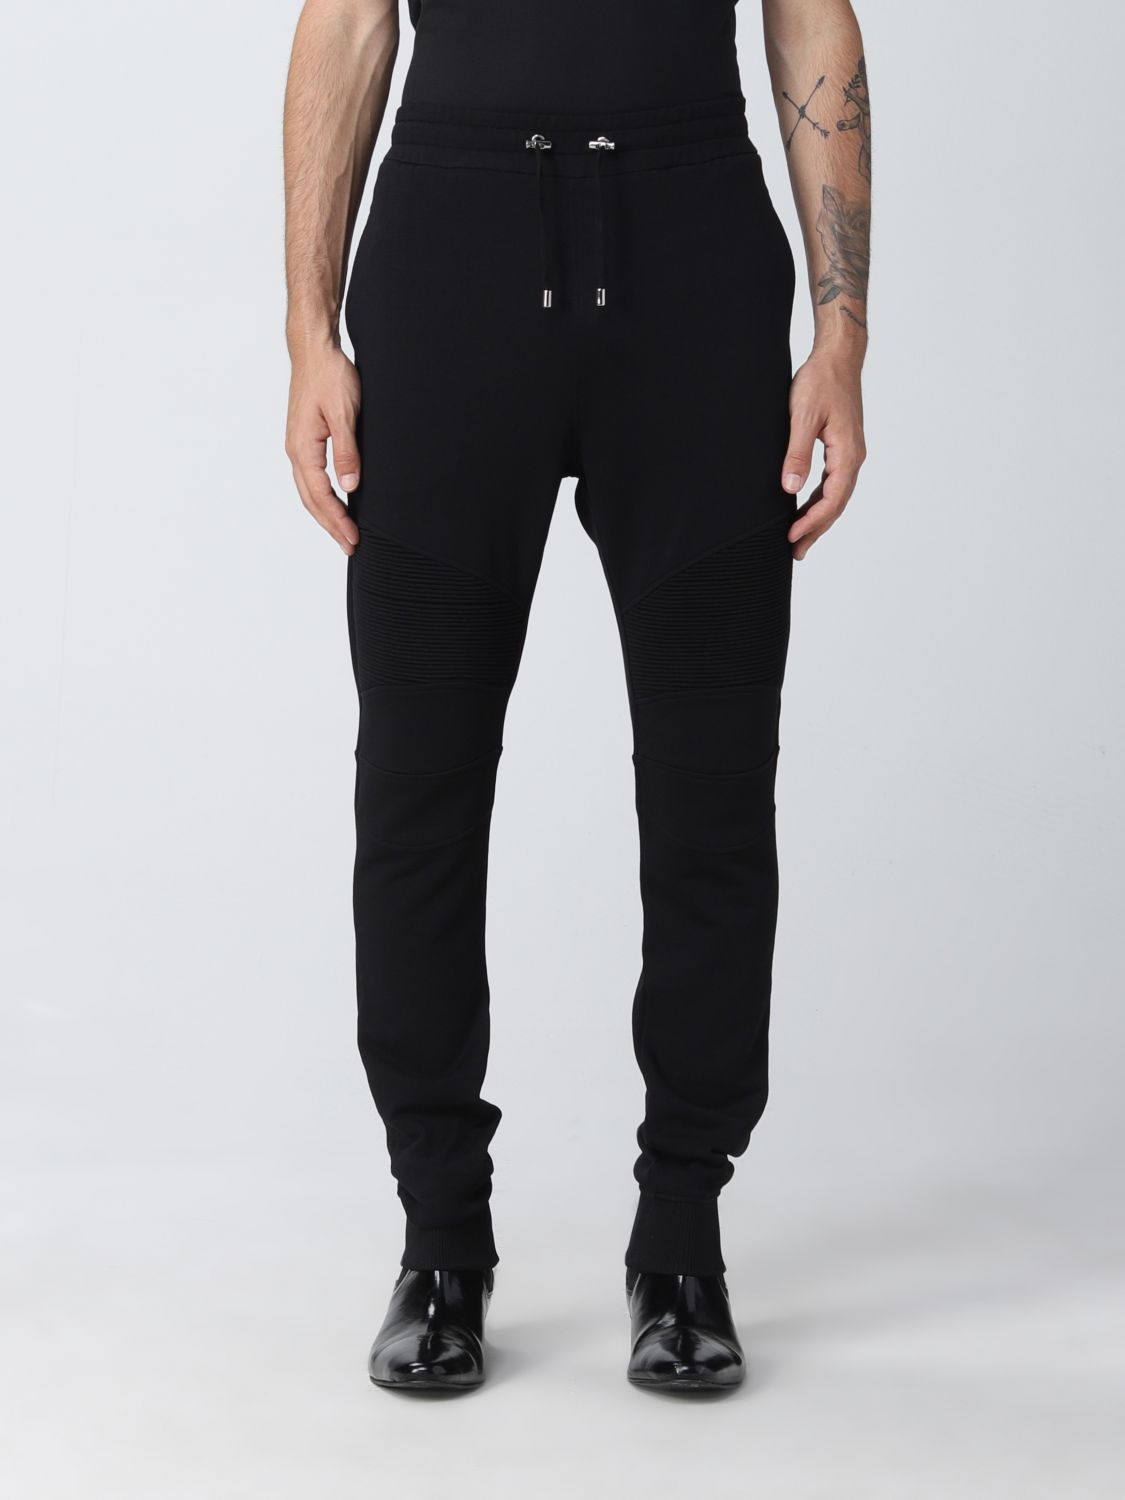 BALMAIN: pants for man - Black | Balmain pants YH1OB000BB66 online at ...